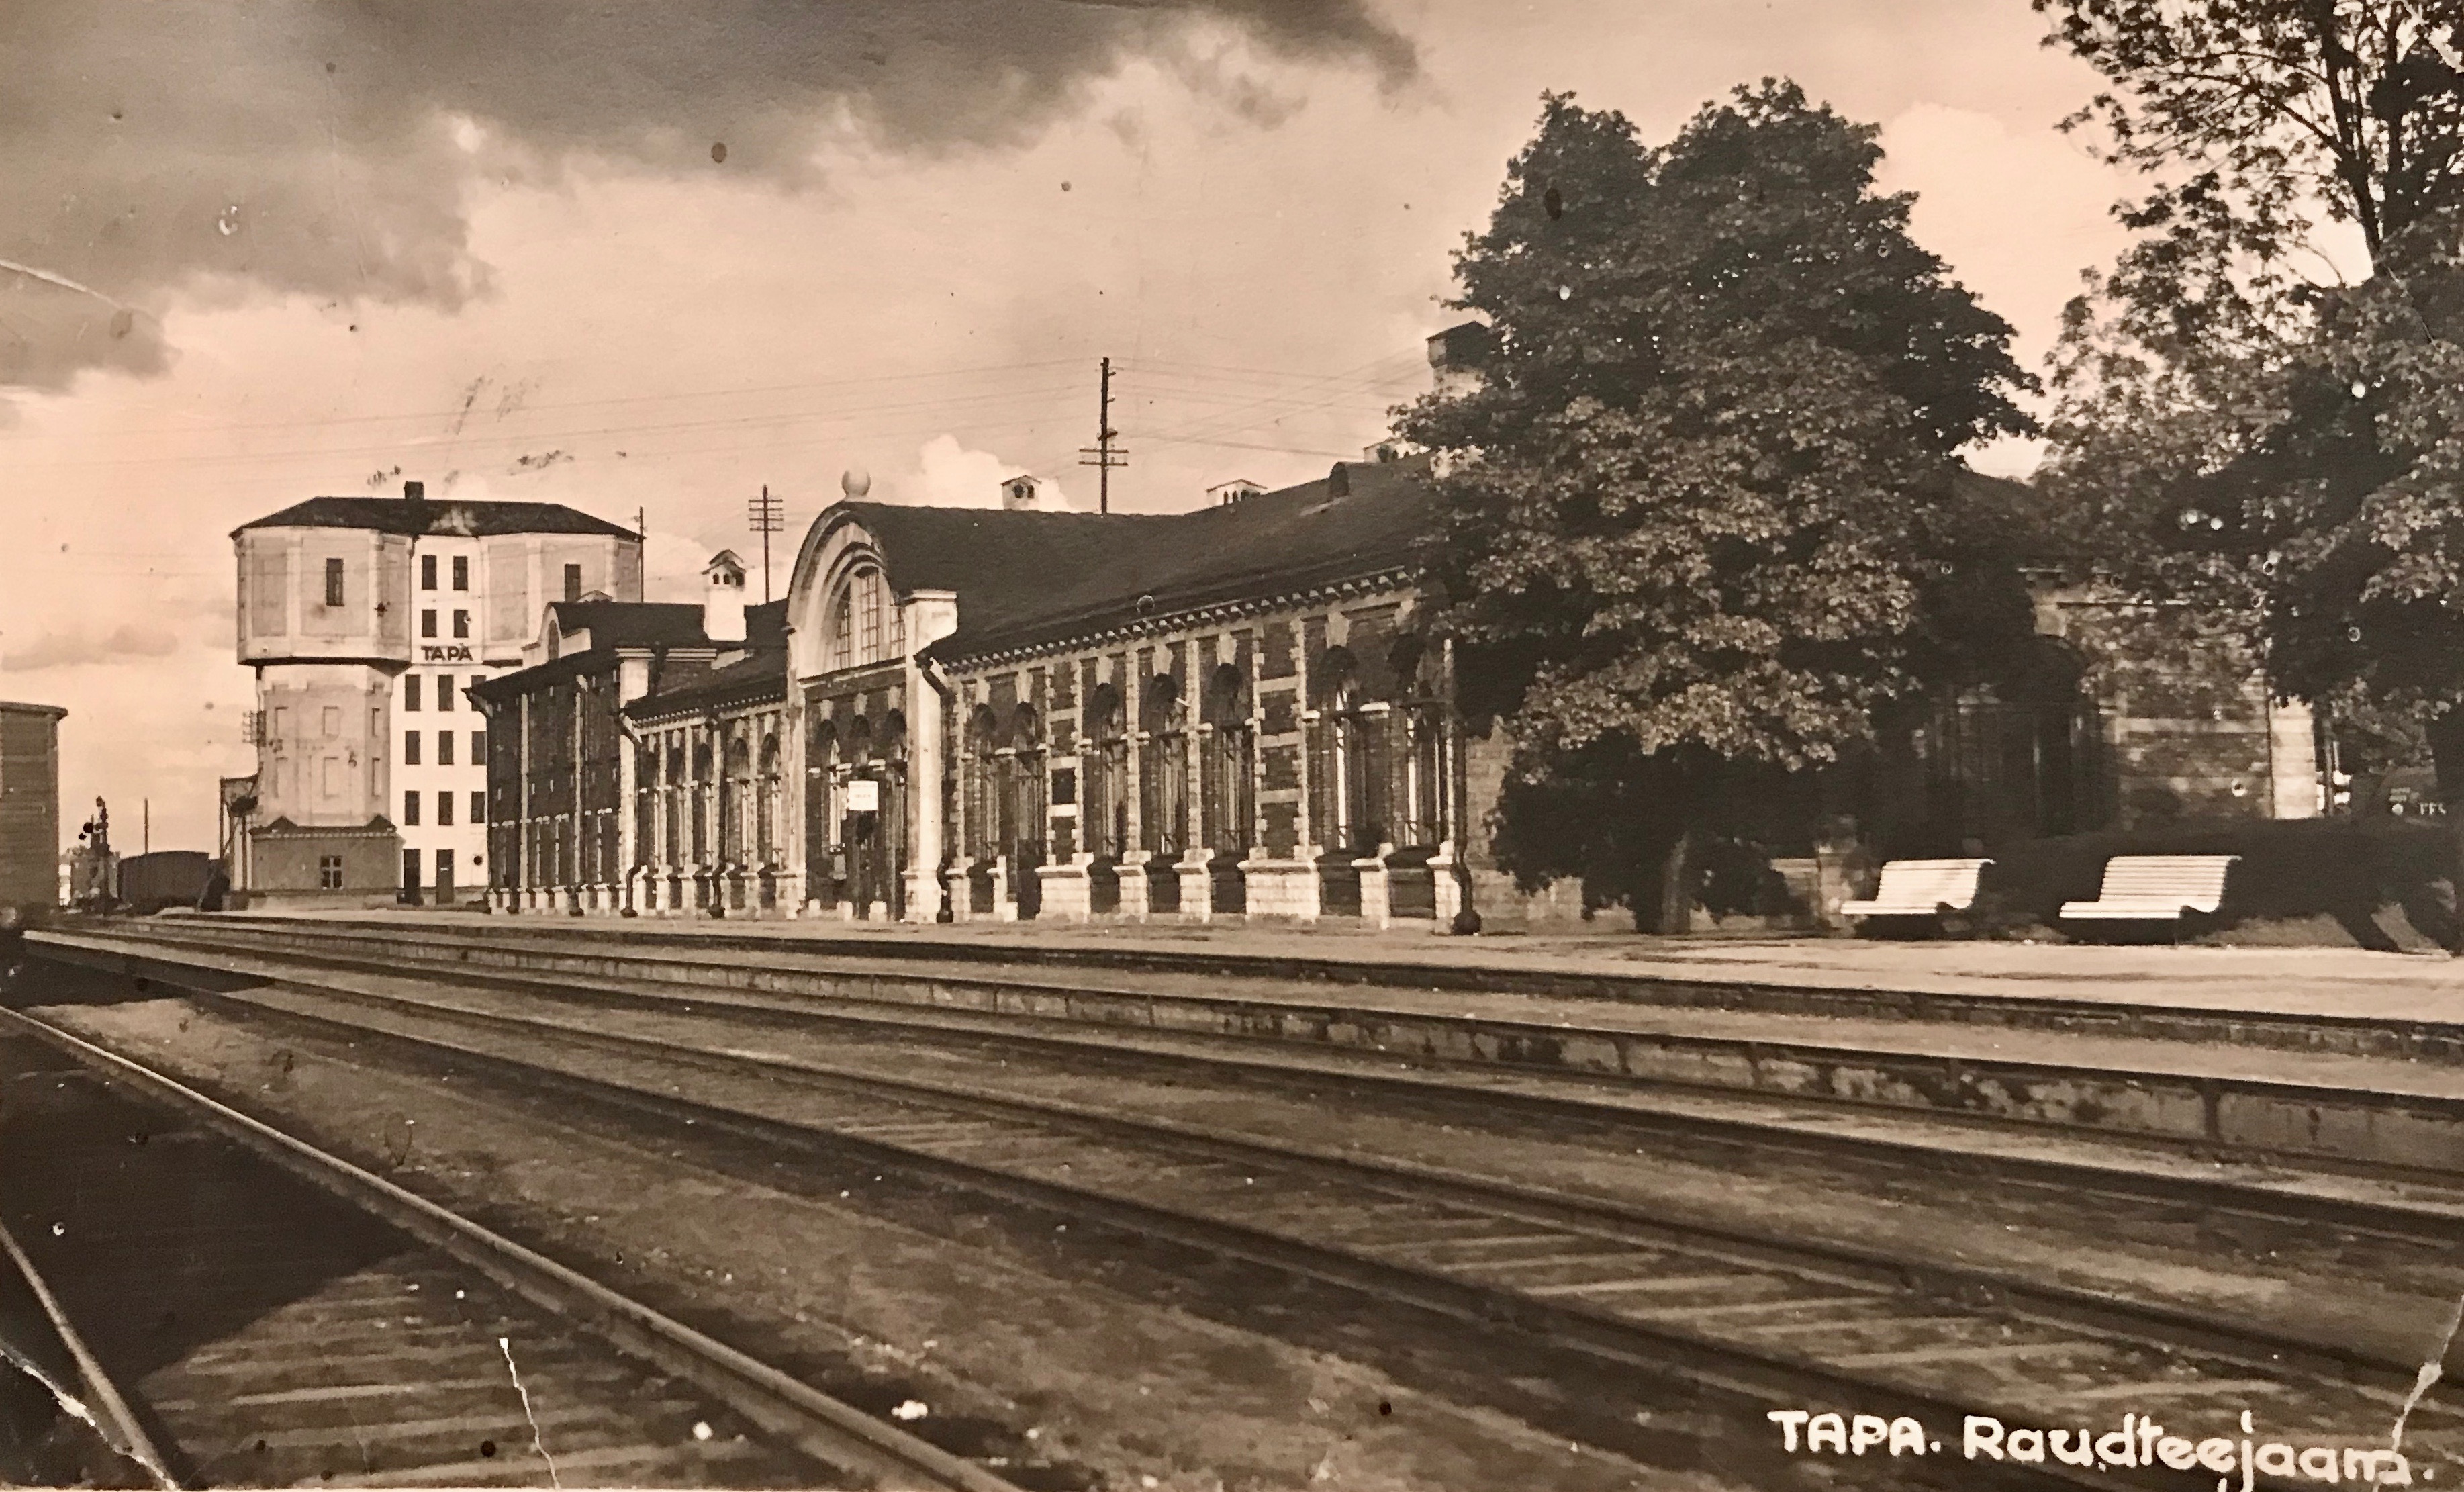 Tapa raudteejaam 1930ndad